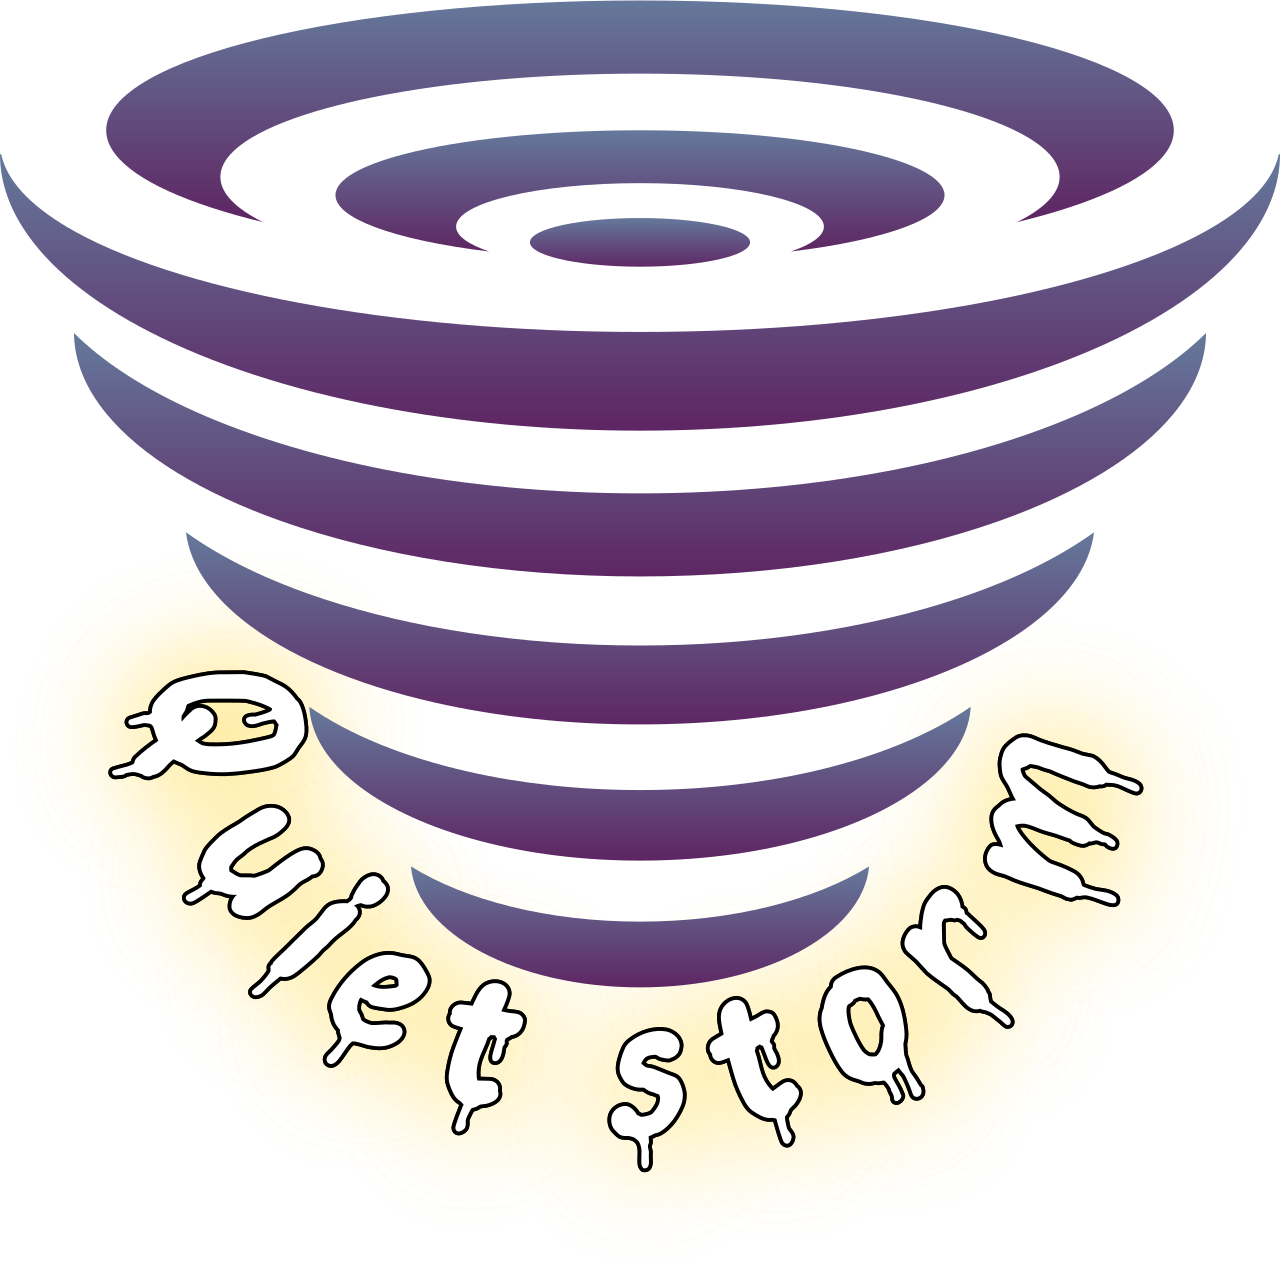 Quiet storm 's logo